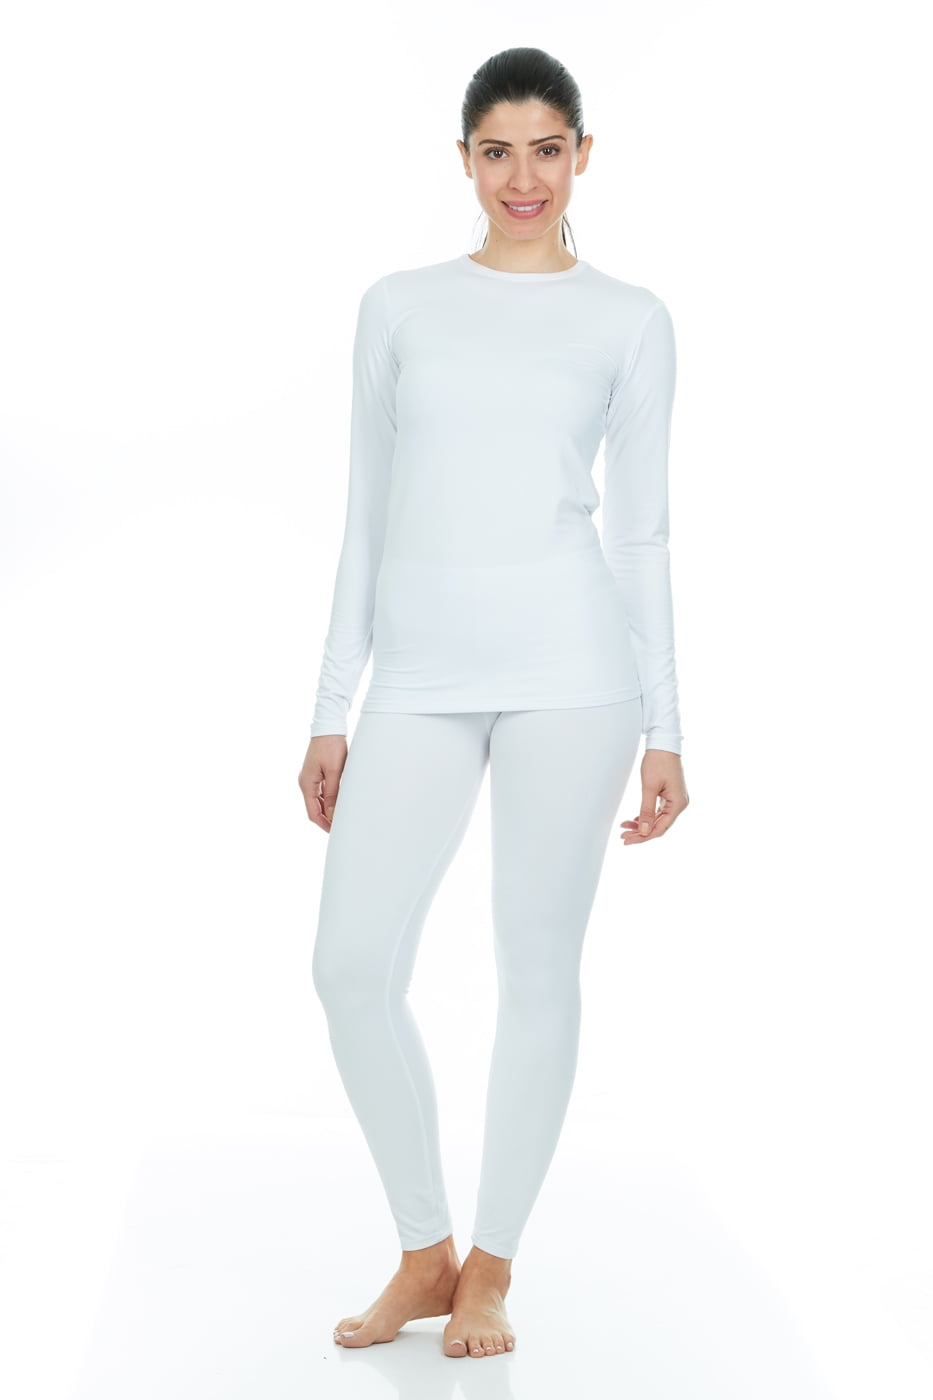 Women Fleece Thermal Top & Bottom Underwear Set Soft Microfiber Warm Beige XL 